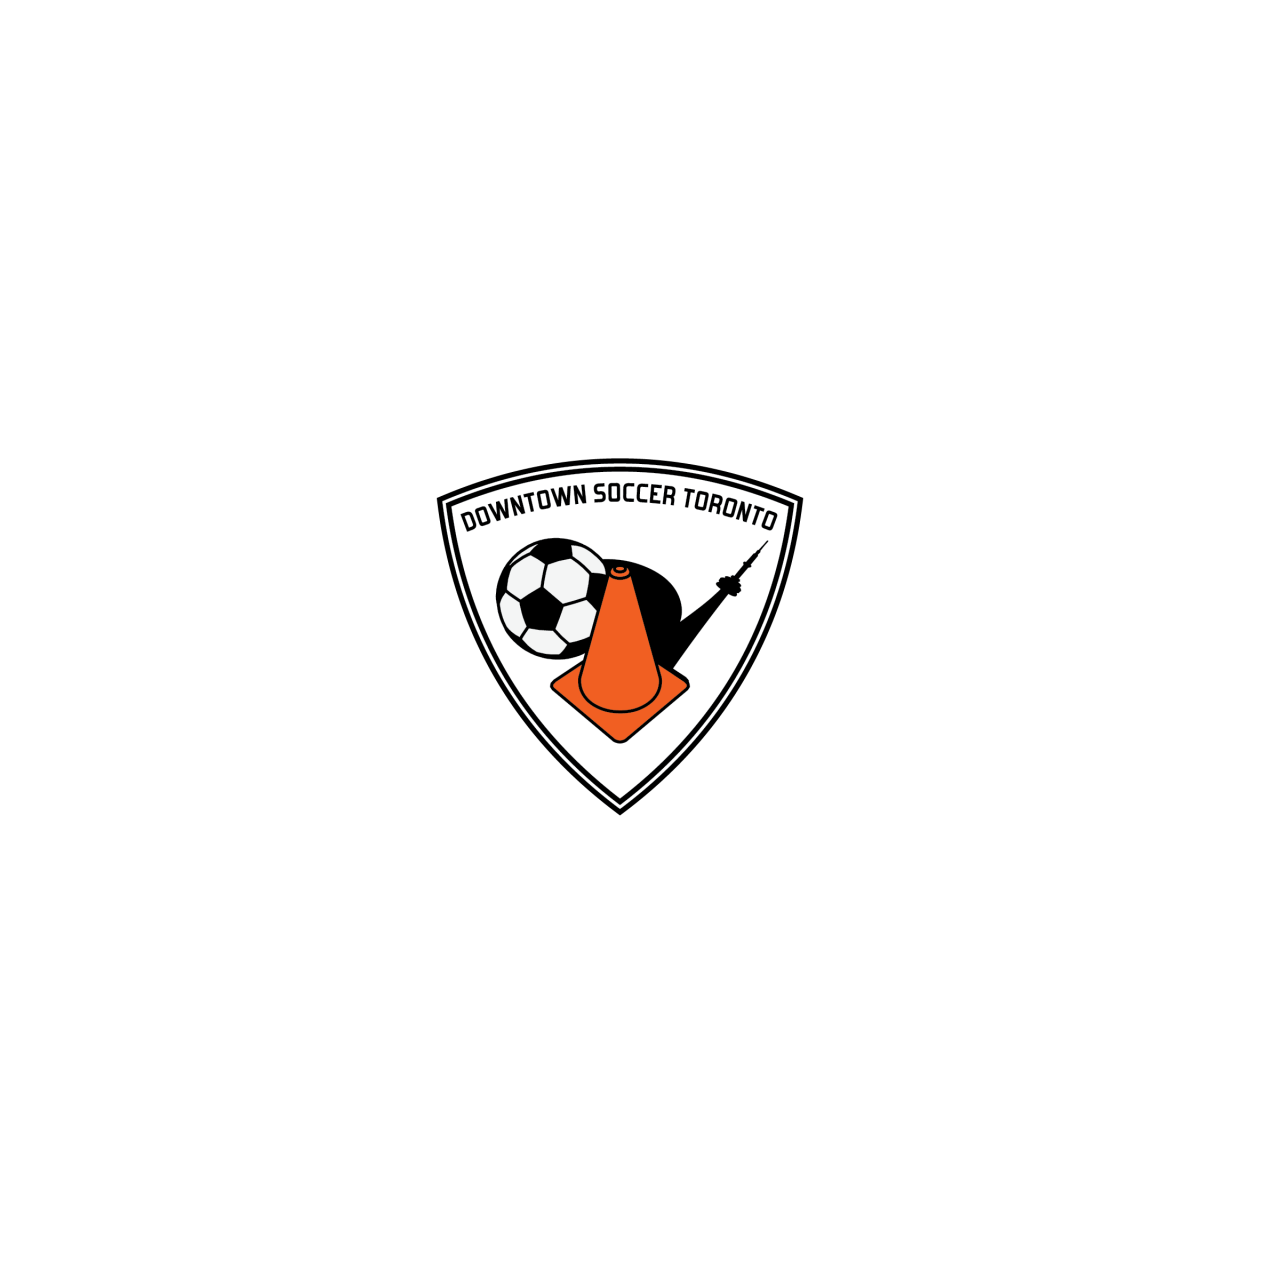 Image of Downtown Soccer Toronto logo